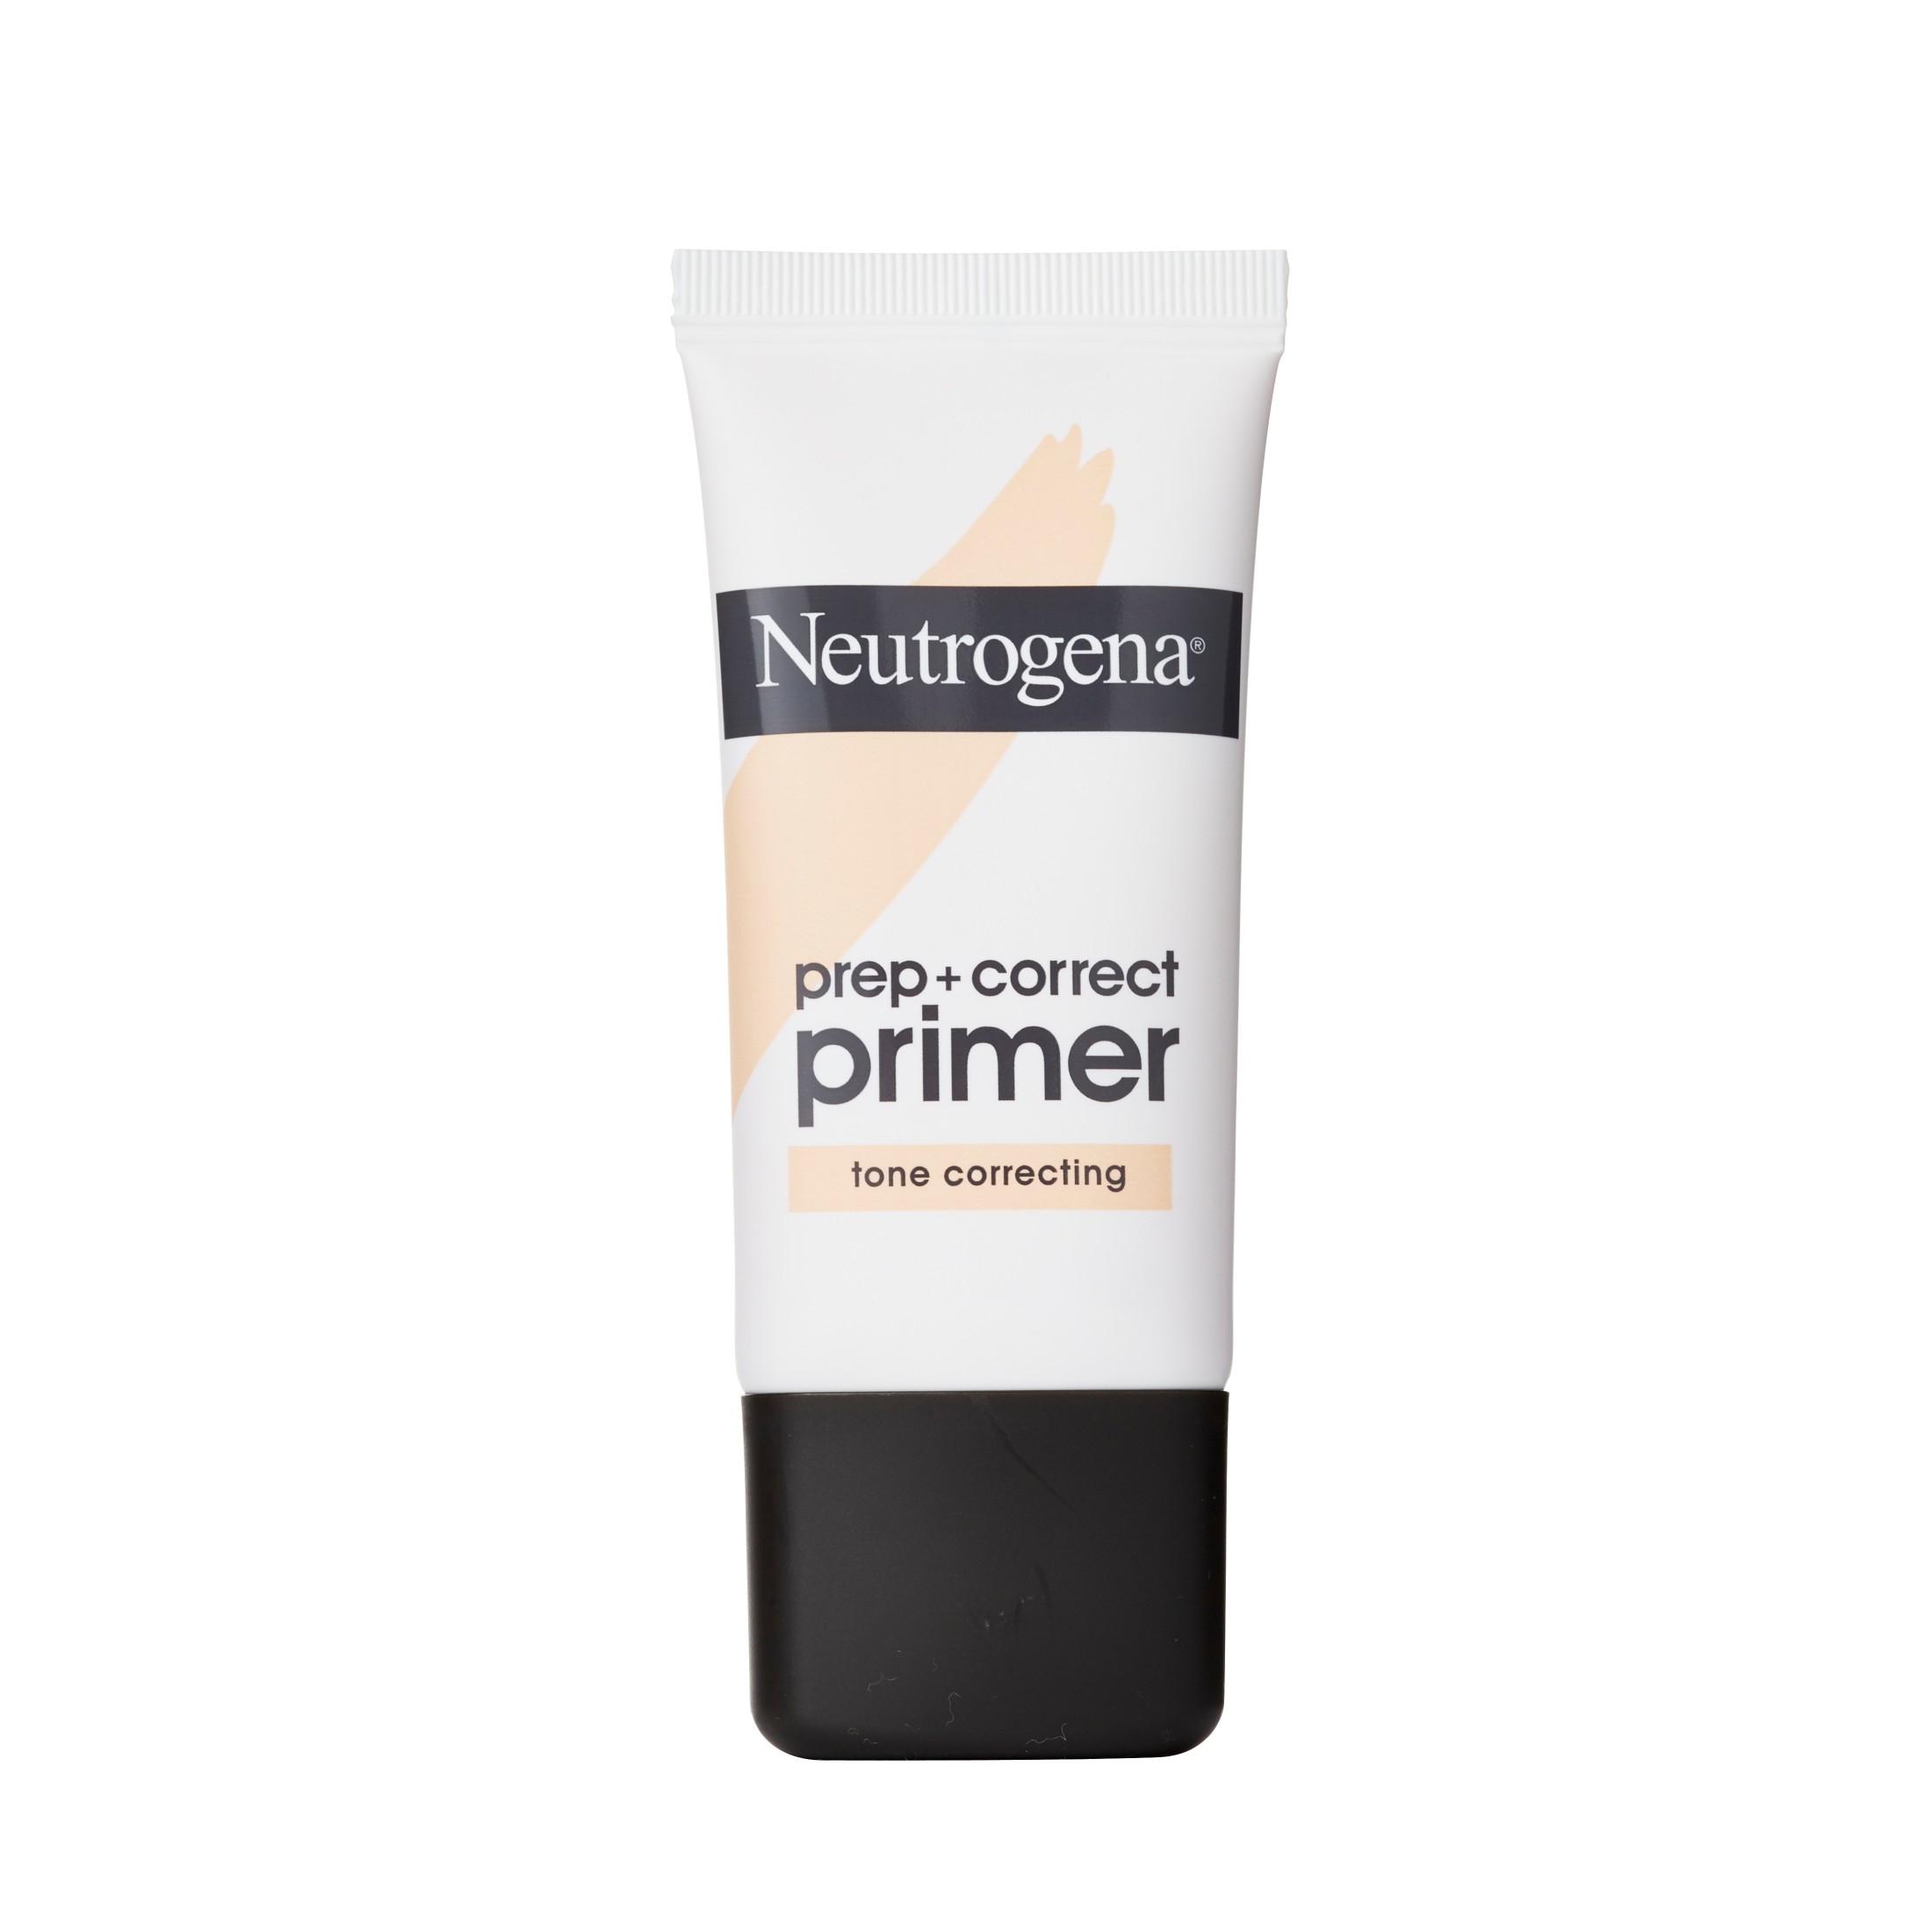 Neutrogena Prep + Correct Peach Face Primer for Even Skin Tone, 1.0 oz - image 1 of 12